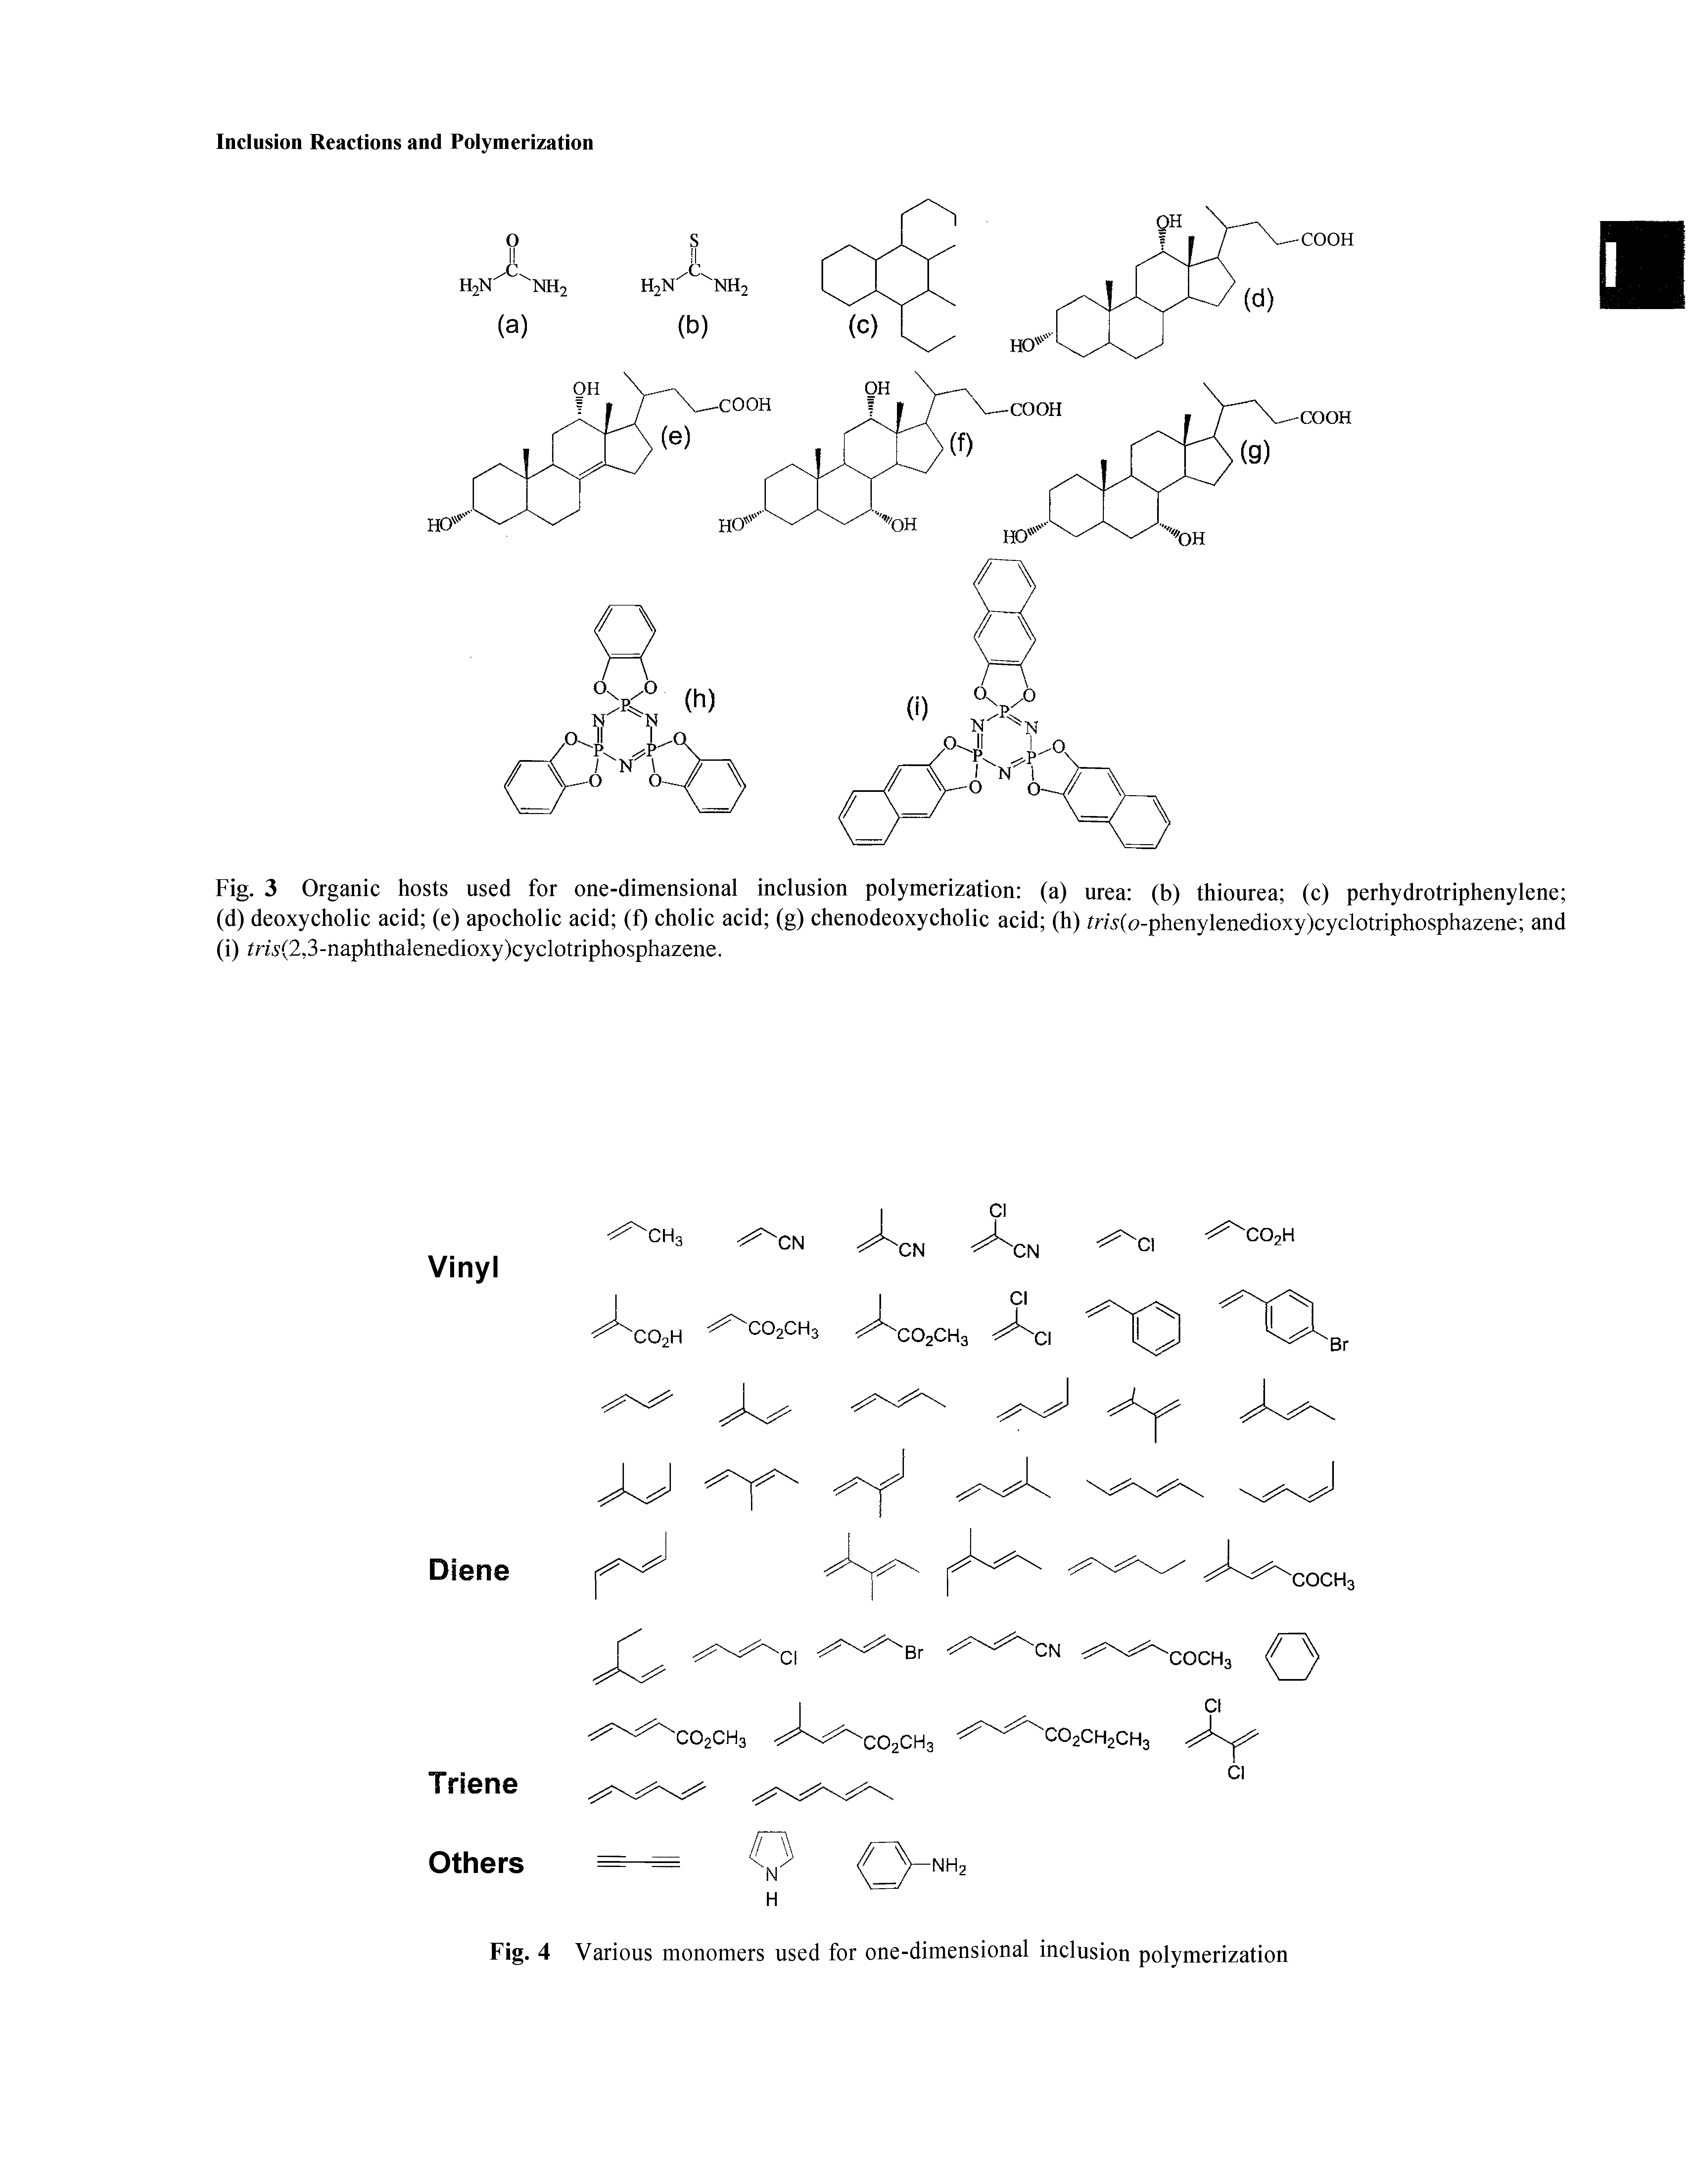 Fig. 3 Organic hosts used for one-dimensional inclusion polymerization (a) urea (b) thiourea (c) perhydrotriphenylene (d) deoxycholic acid (e) apocholic acid (f) cholic acid (g) chenodeoxycholic acid (h) m5 (6>-phenylenedioxy)cyclotriphosphazene and (i) n5(2,3-naphthalenedioxy)cyclotriphosphazene.